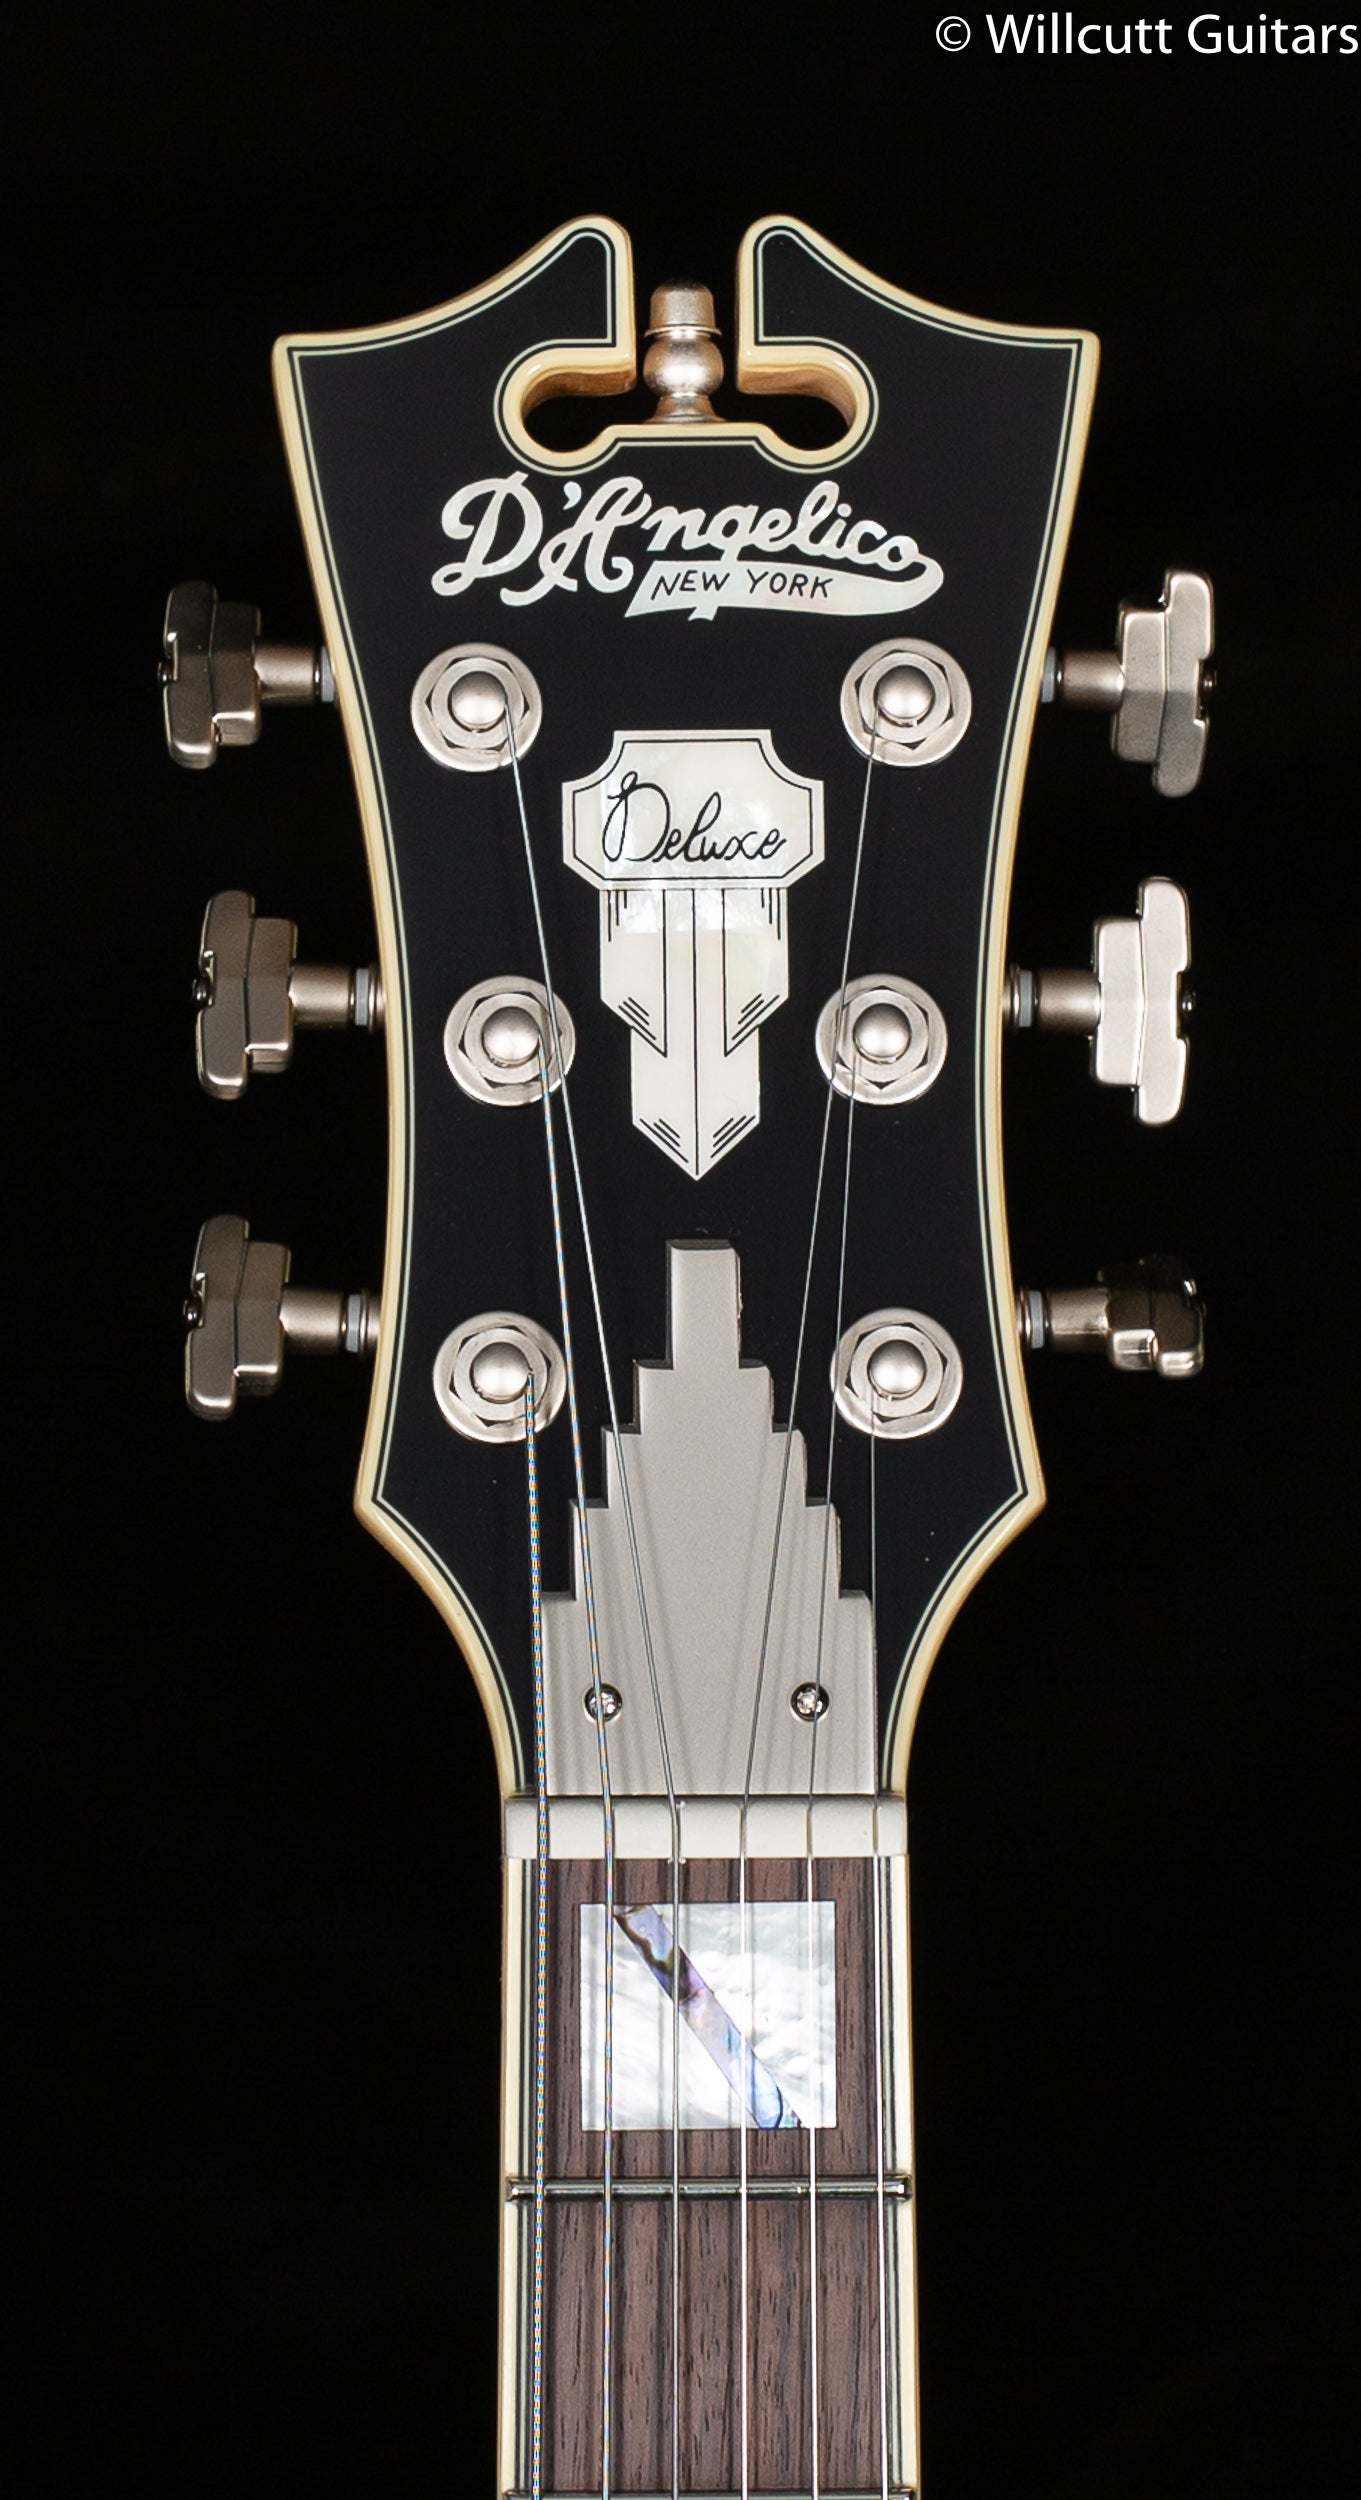 D'Angelico Deluxe Brighton LE Sage P-90's - Willcutt Guitars